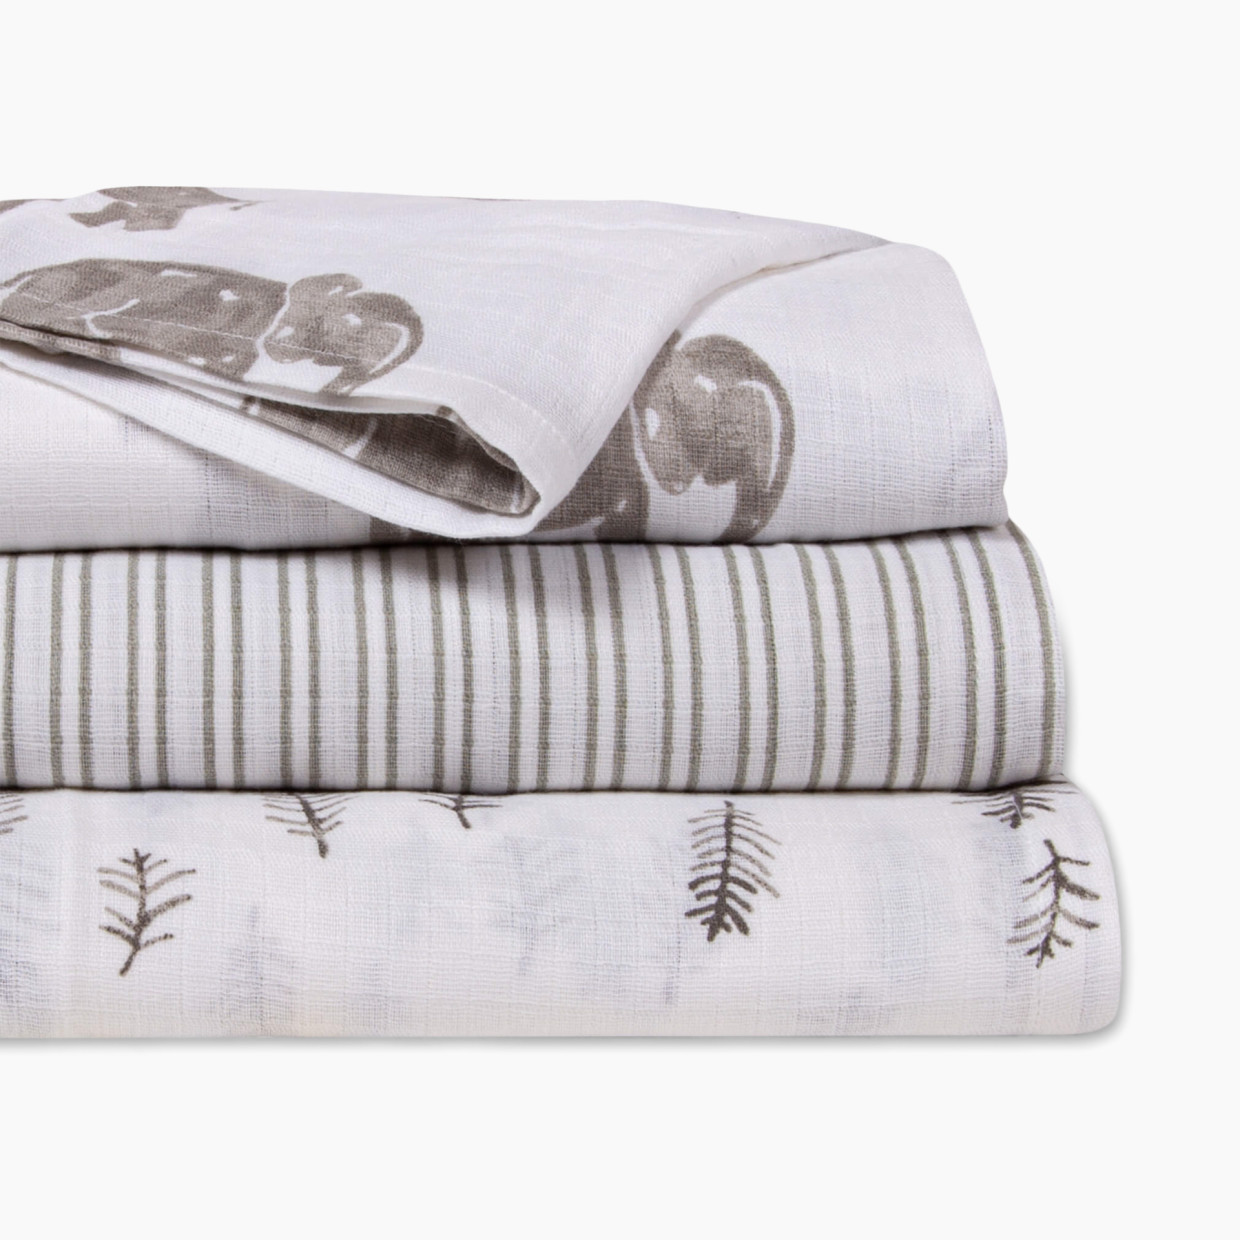 Burt's Bees Baby Organic Cotton Muslin Swaddle Blankets (3 Pack) - Neutral Wandering Elephants.